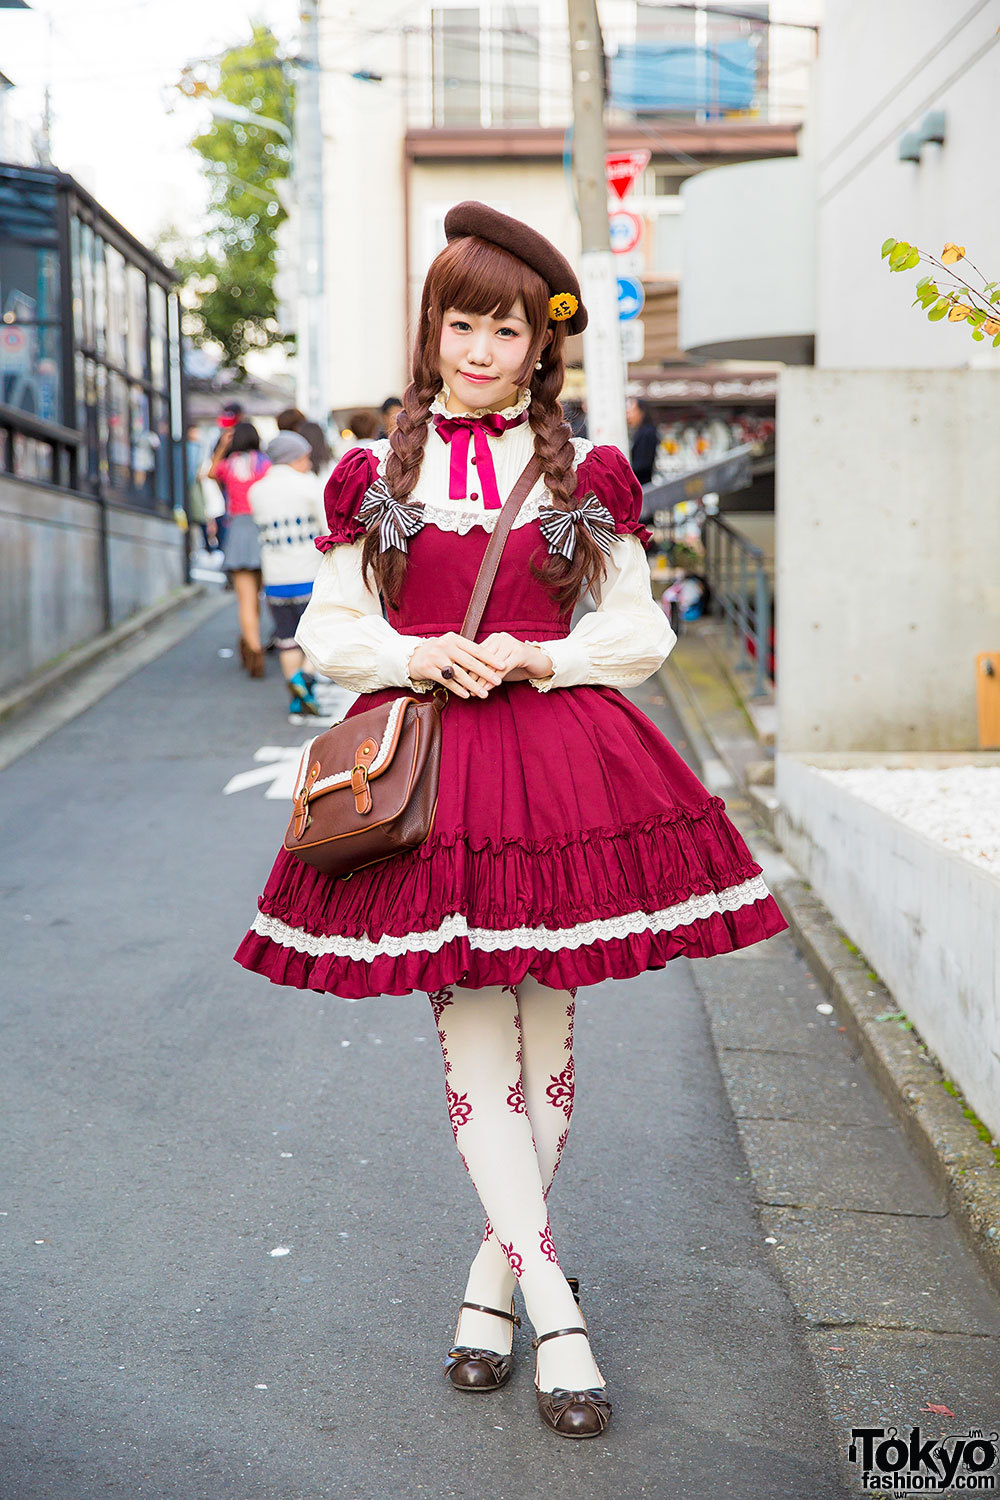 tokyo-fashion:  Kyokorin is a 20-year-old lolita who we met on the street in Harajuku.